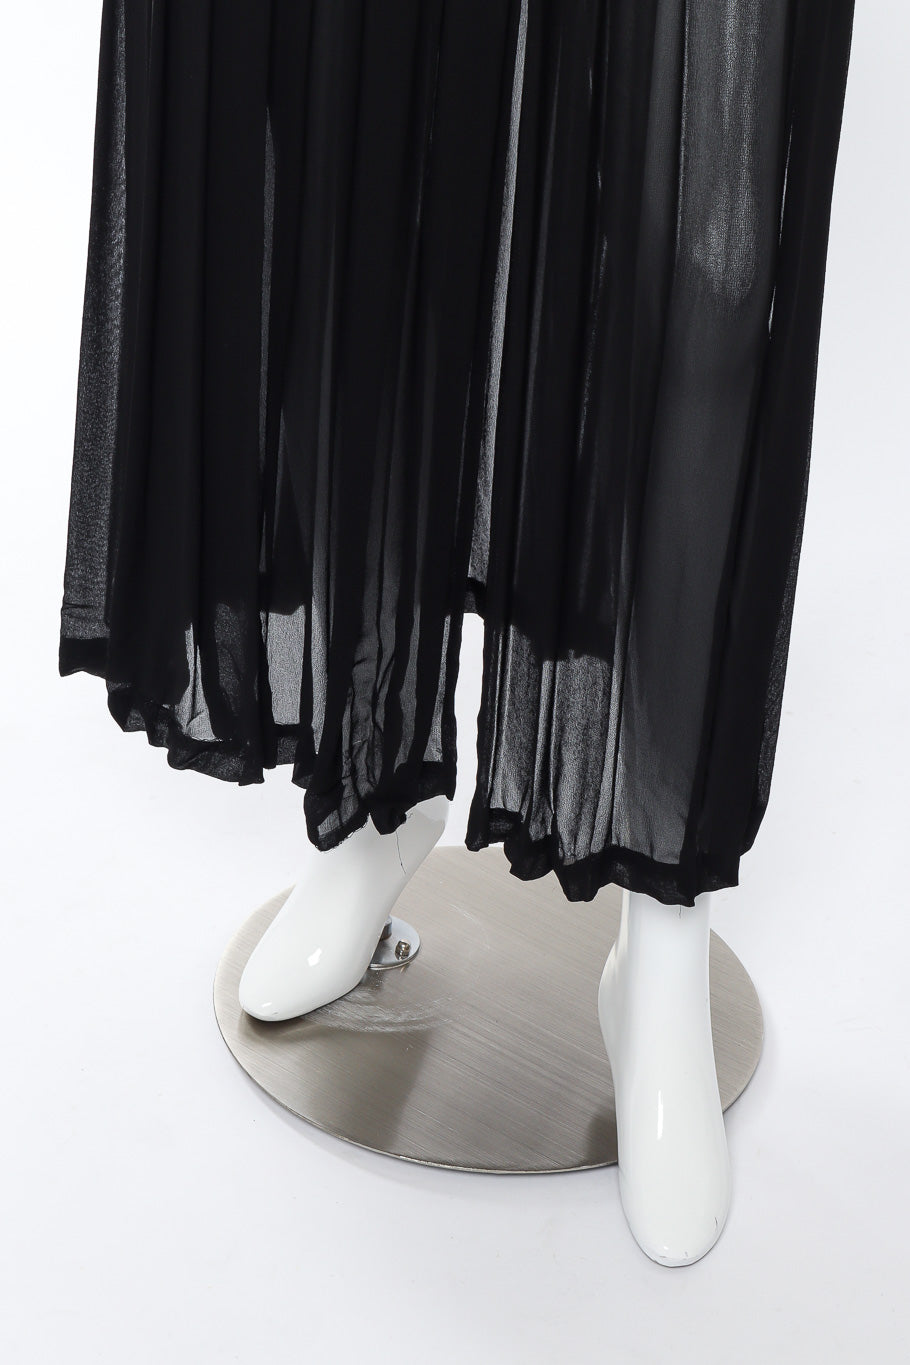 Vintage John Murrough Studded Maxi Dress hem closeup @Recessla